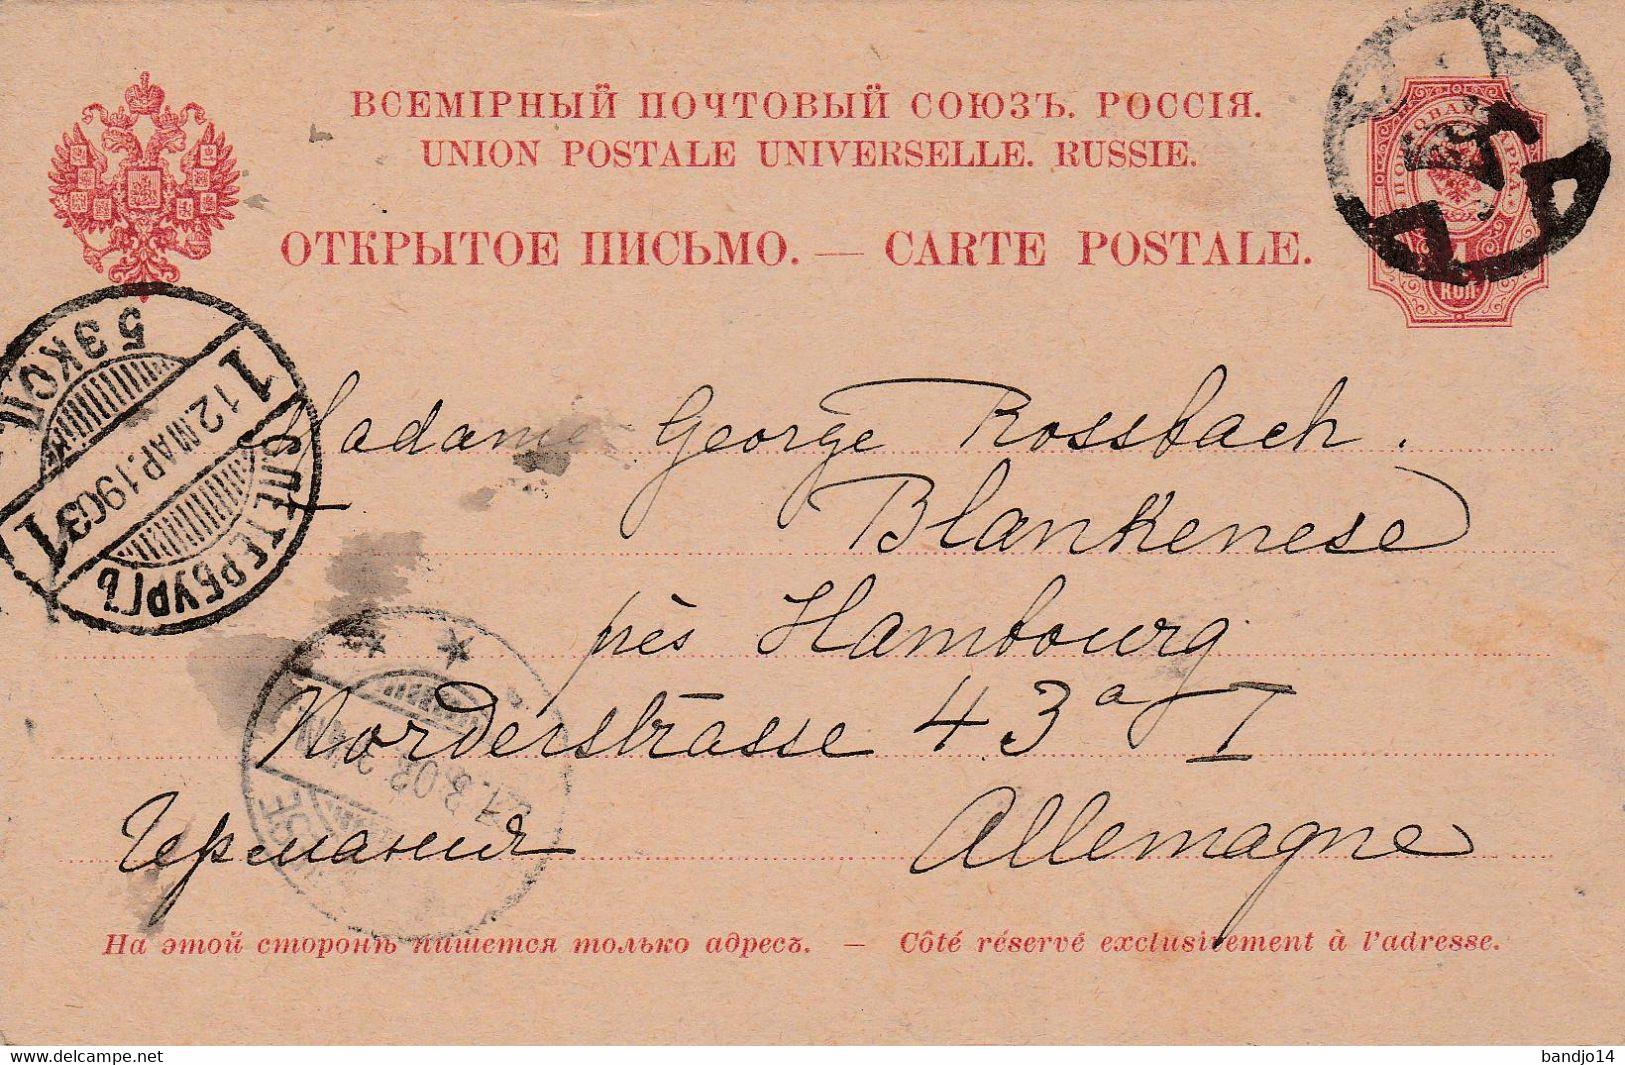 1903 - Entier Postal Pour L' Allemagne  Scan Recto-verso - Interi Postali